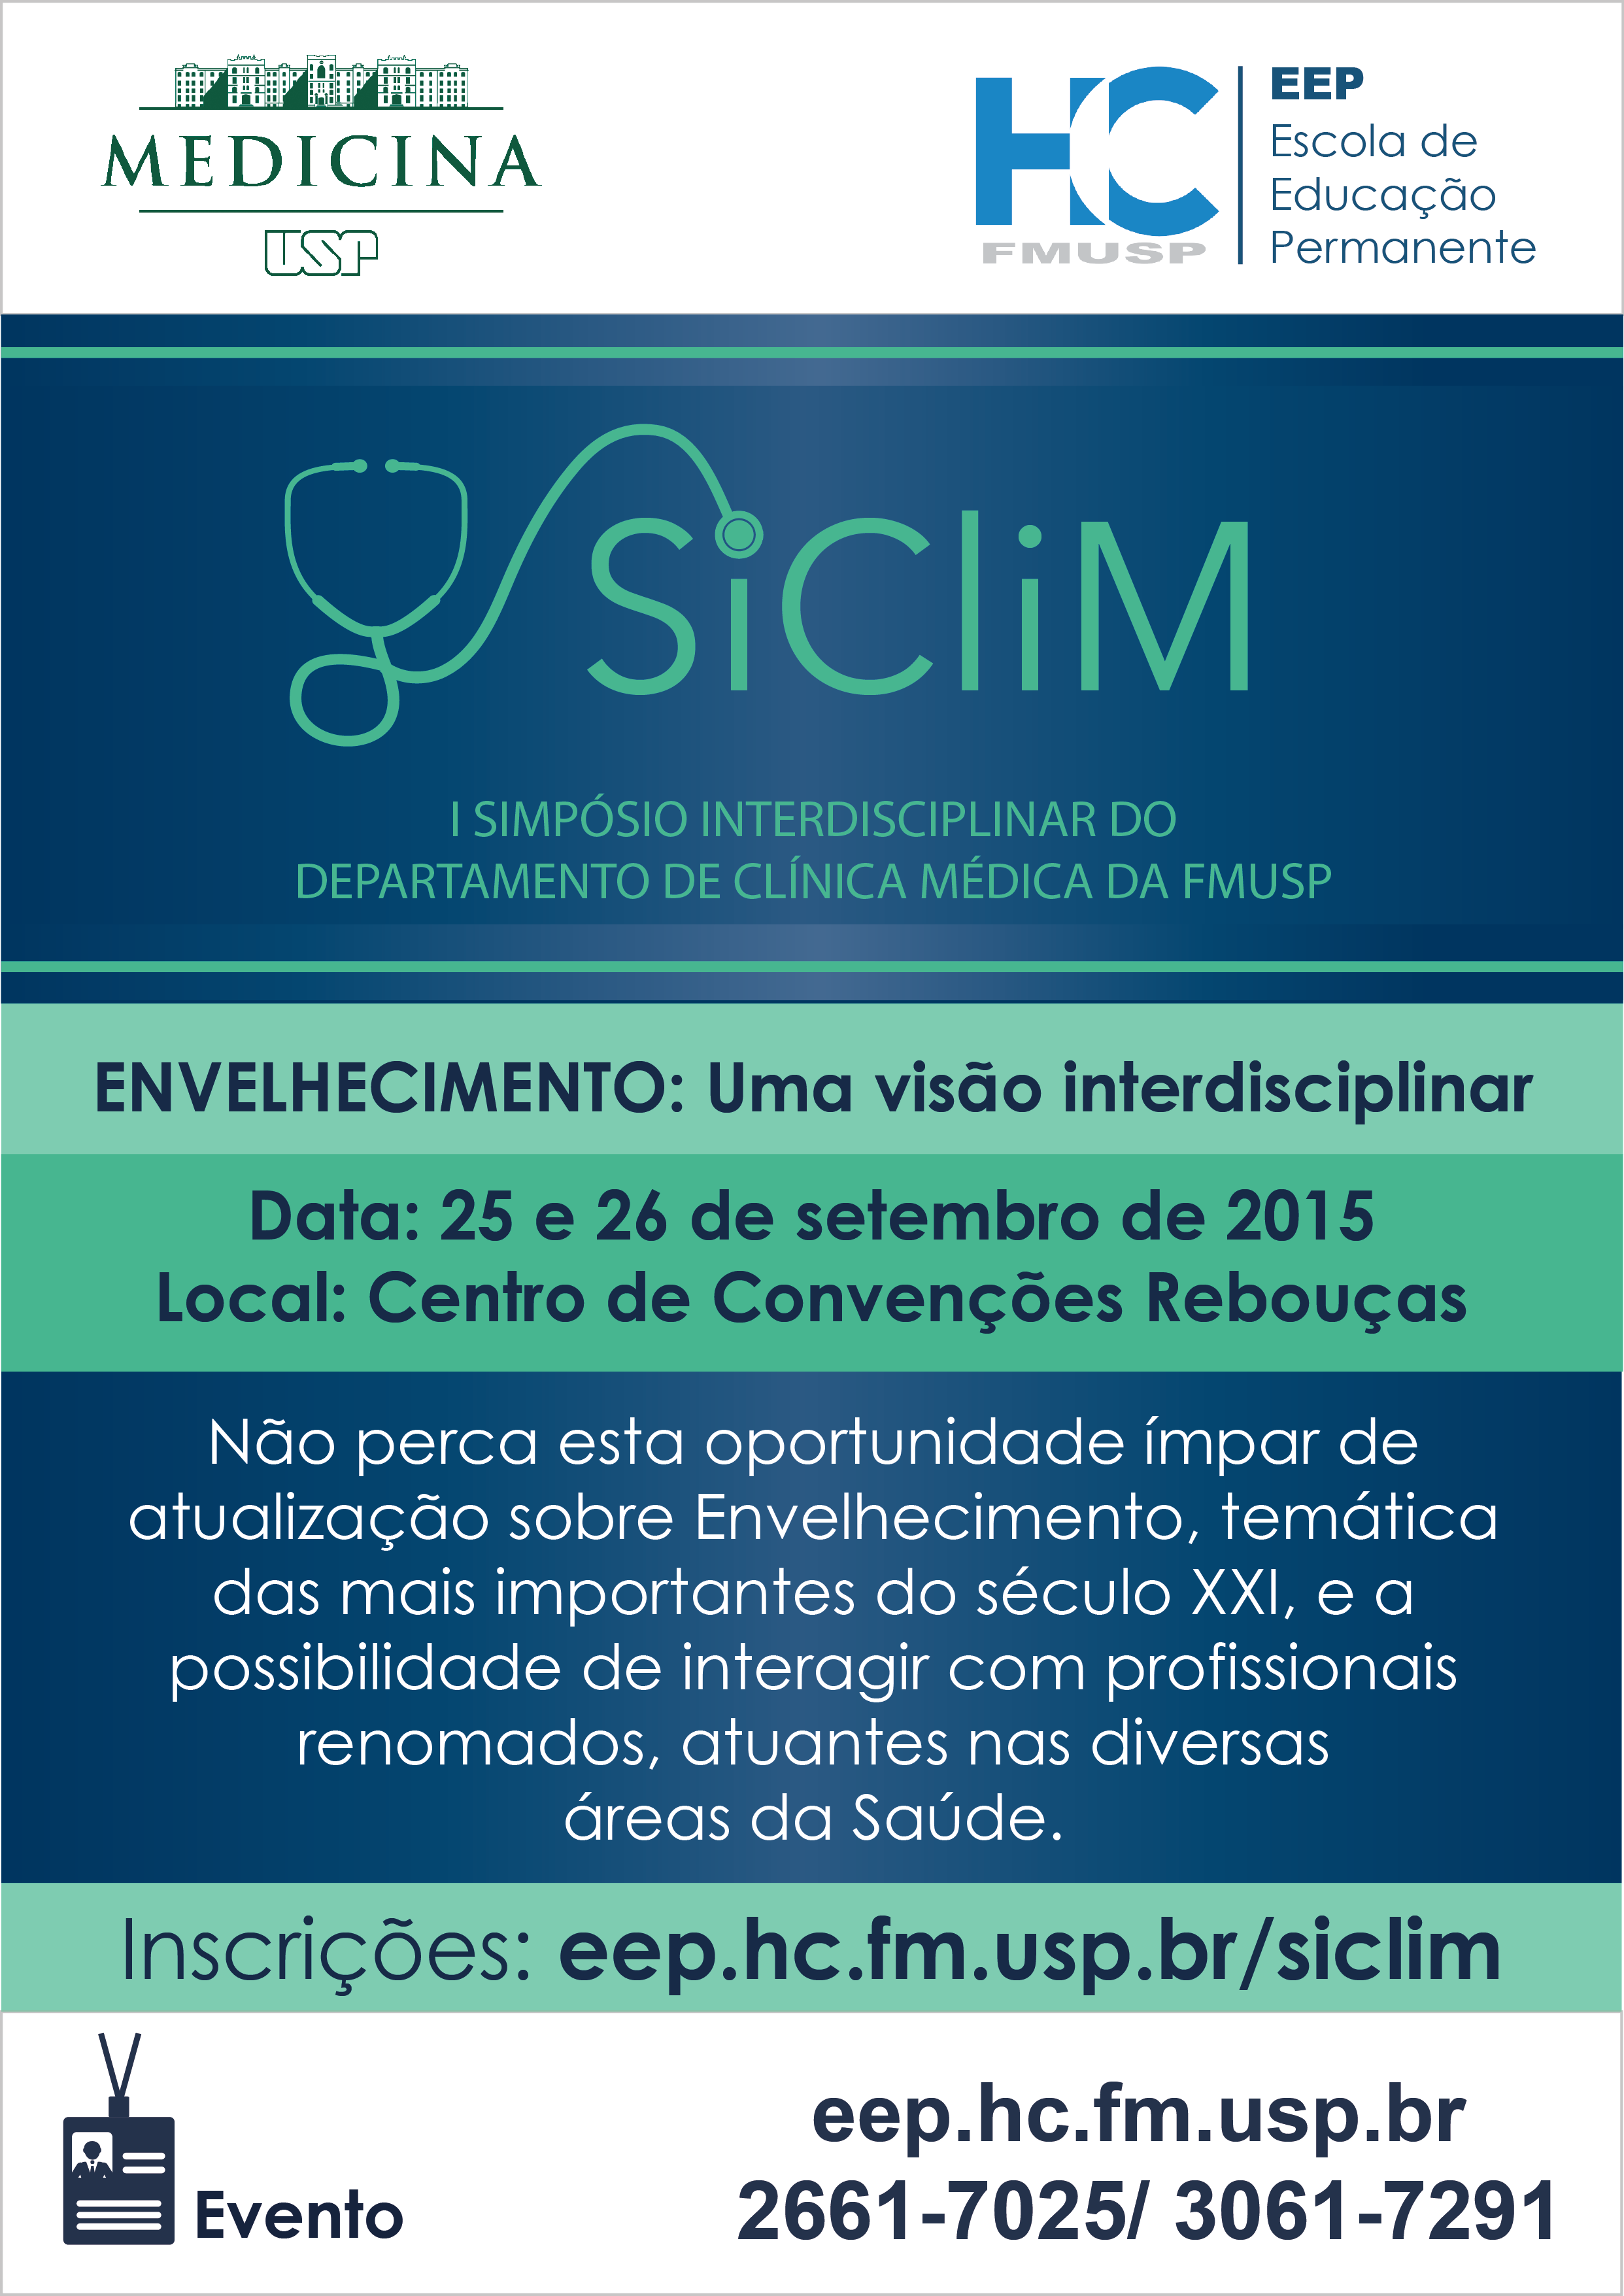 SiCliM: simpósio da FMUSP promove diálogo entre especialidades